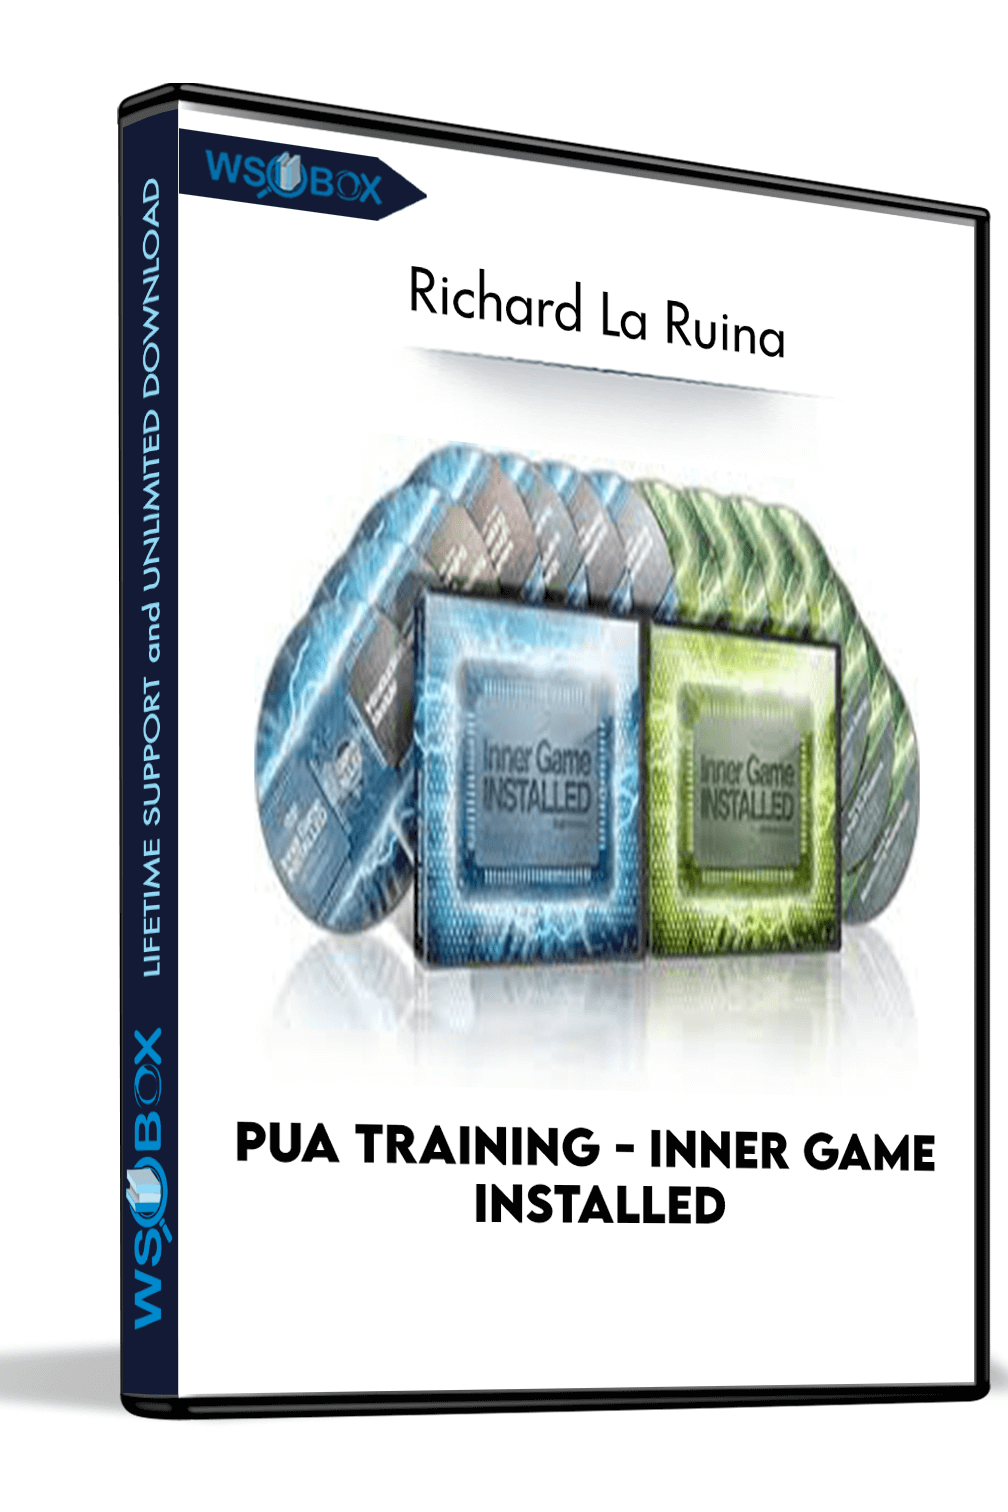 pua-training-inner-game-installed-richard-la-ruina